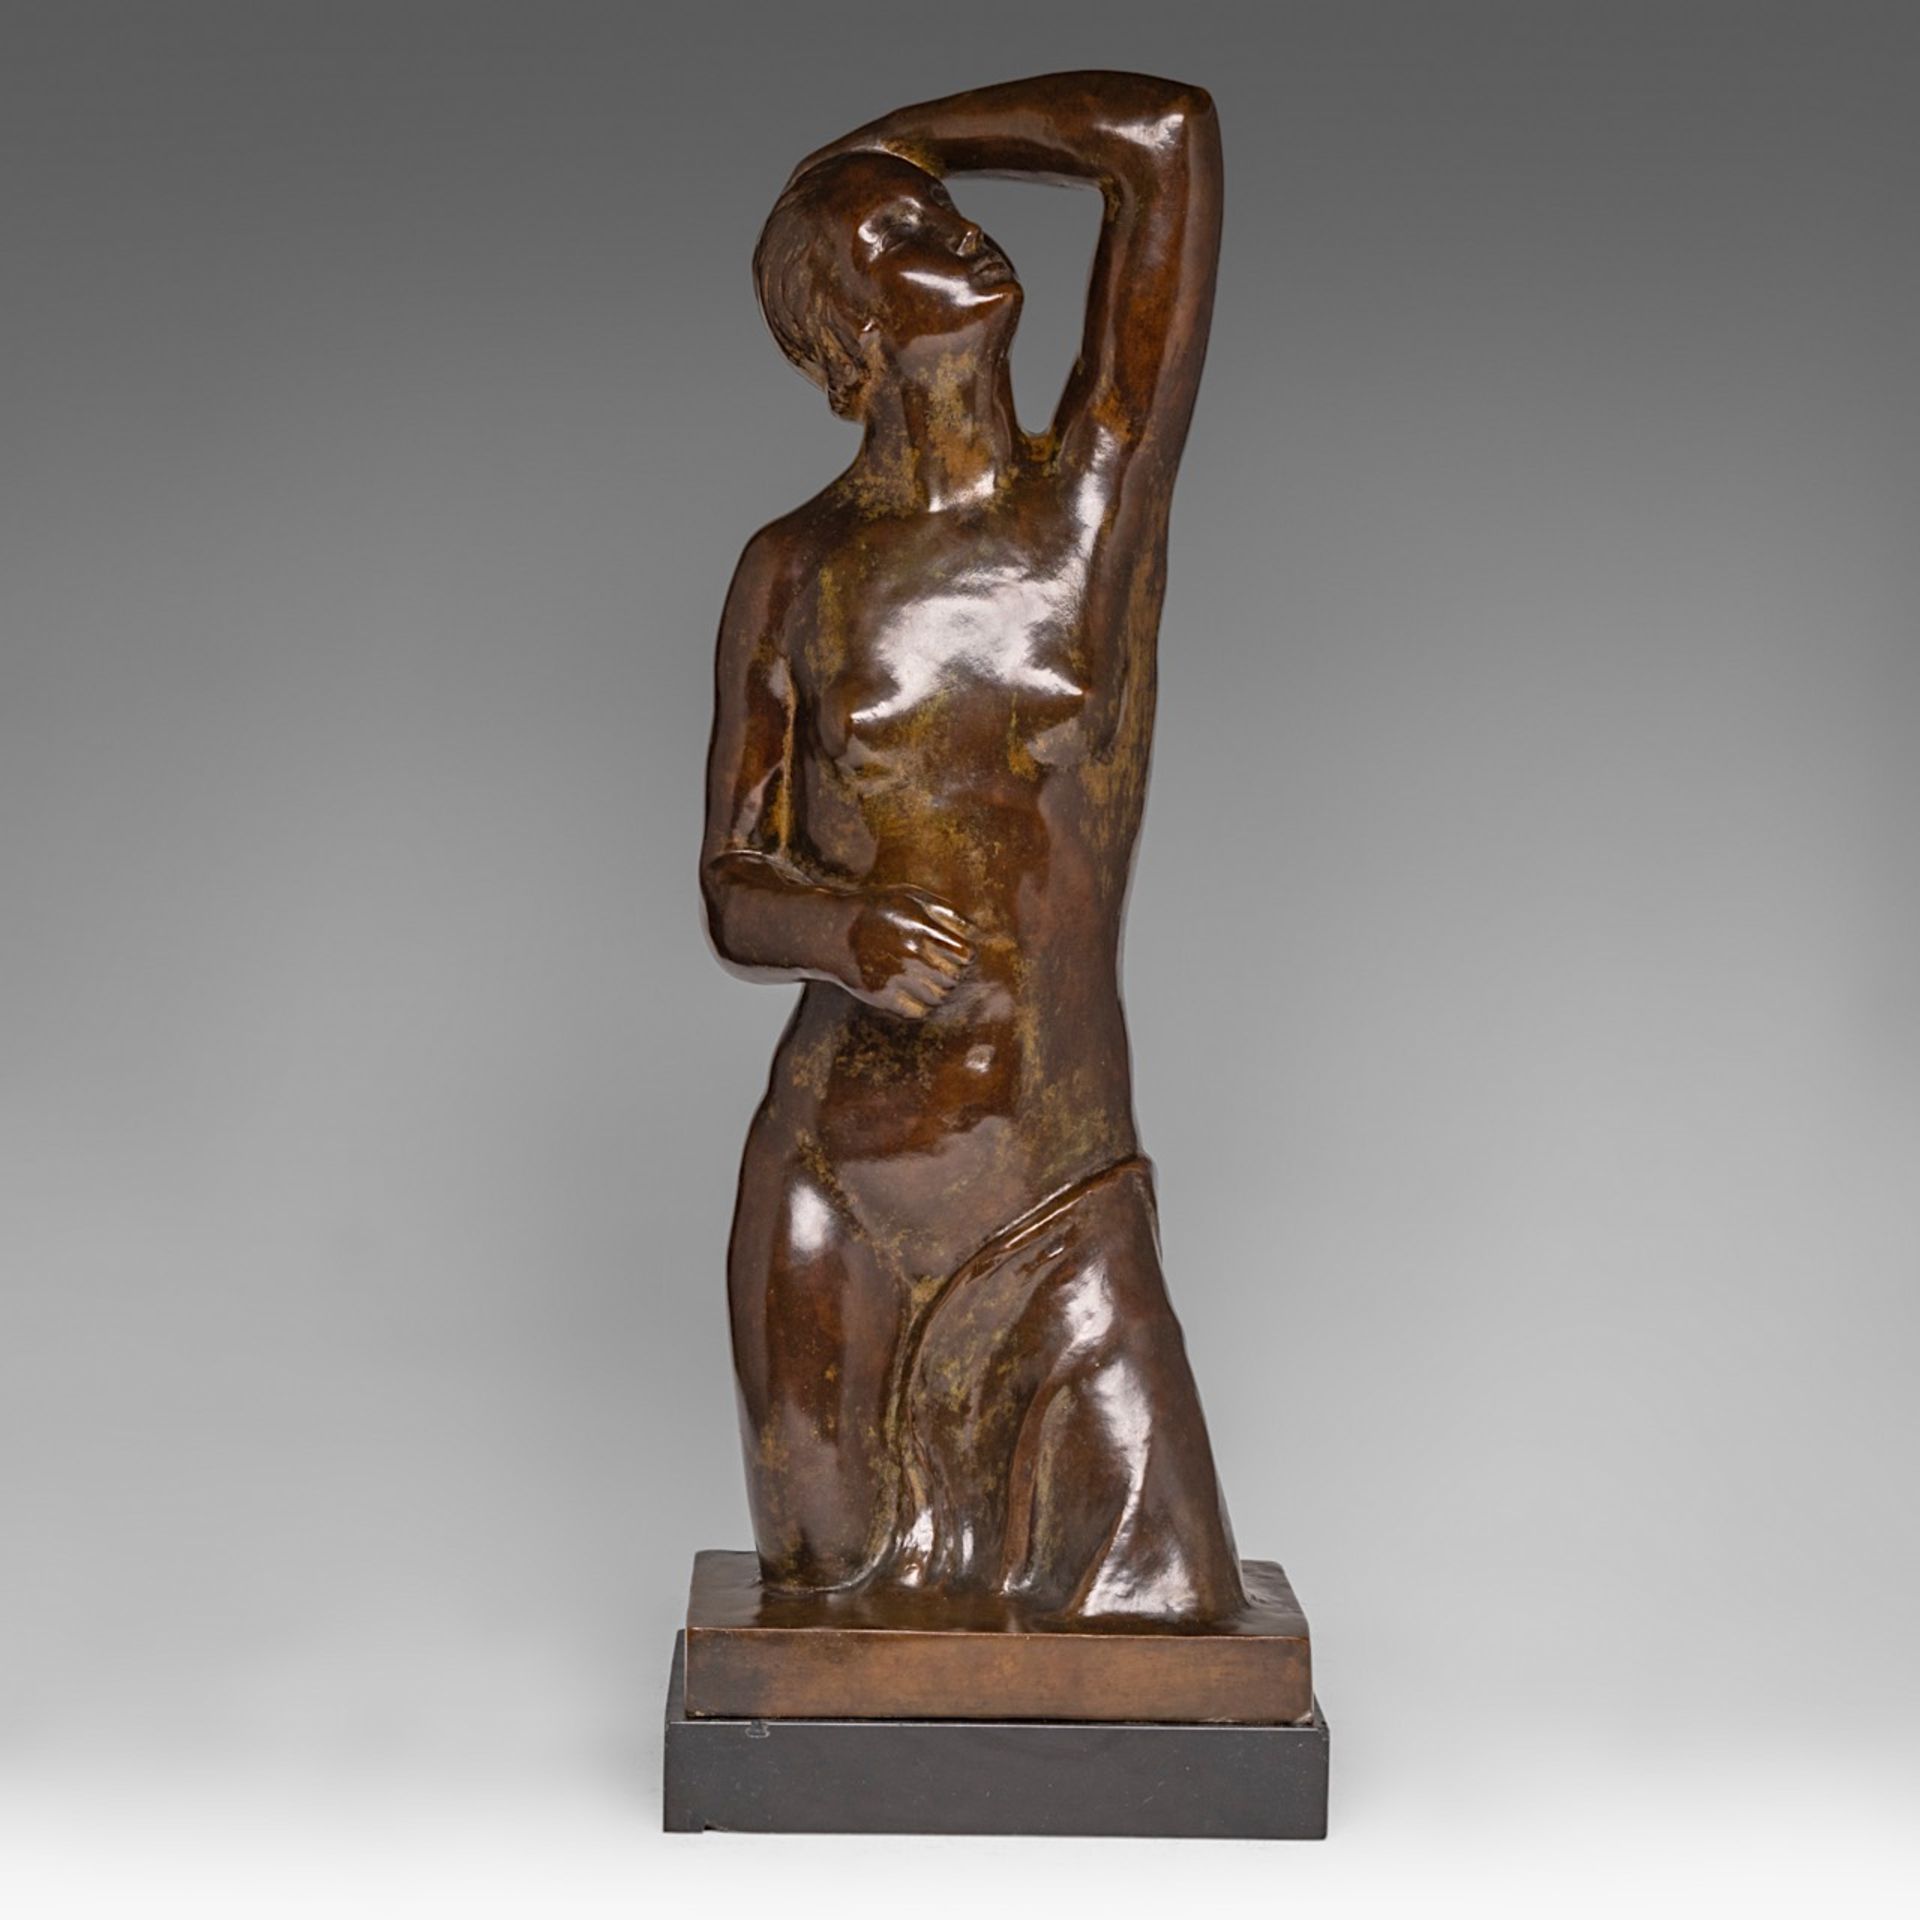 Leon Sarteel (1882-1942), Baigneuse, patinated bronze, casted by G. Vindevogel, Zwijnaarde, H 58 cm